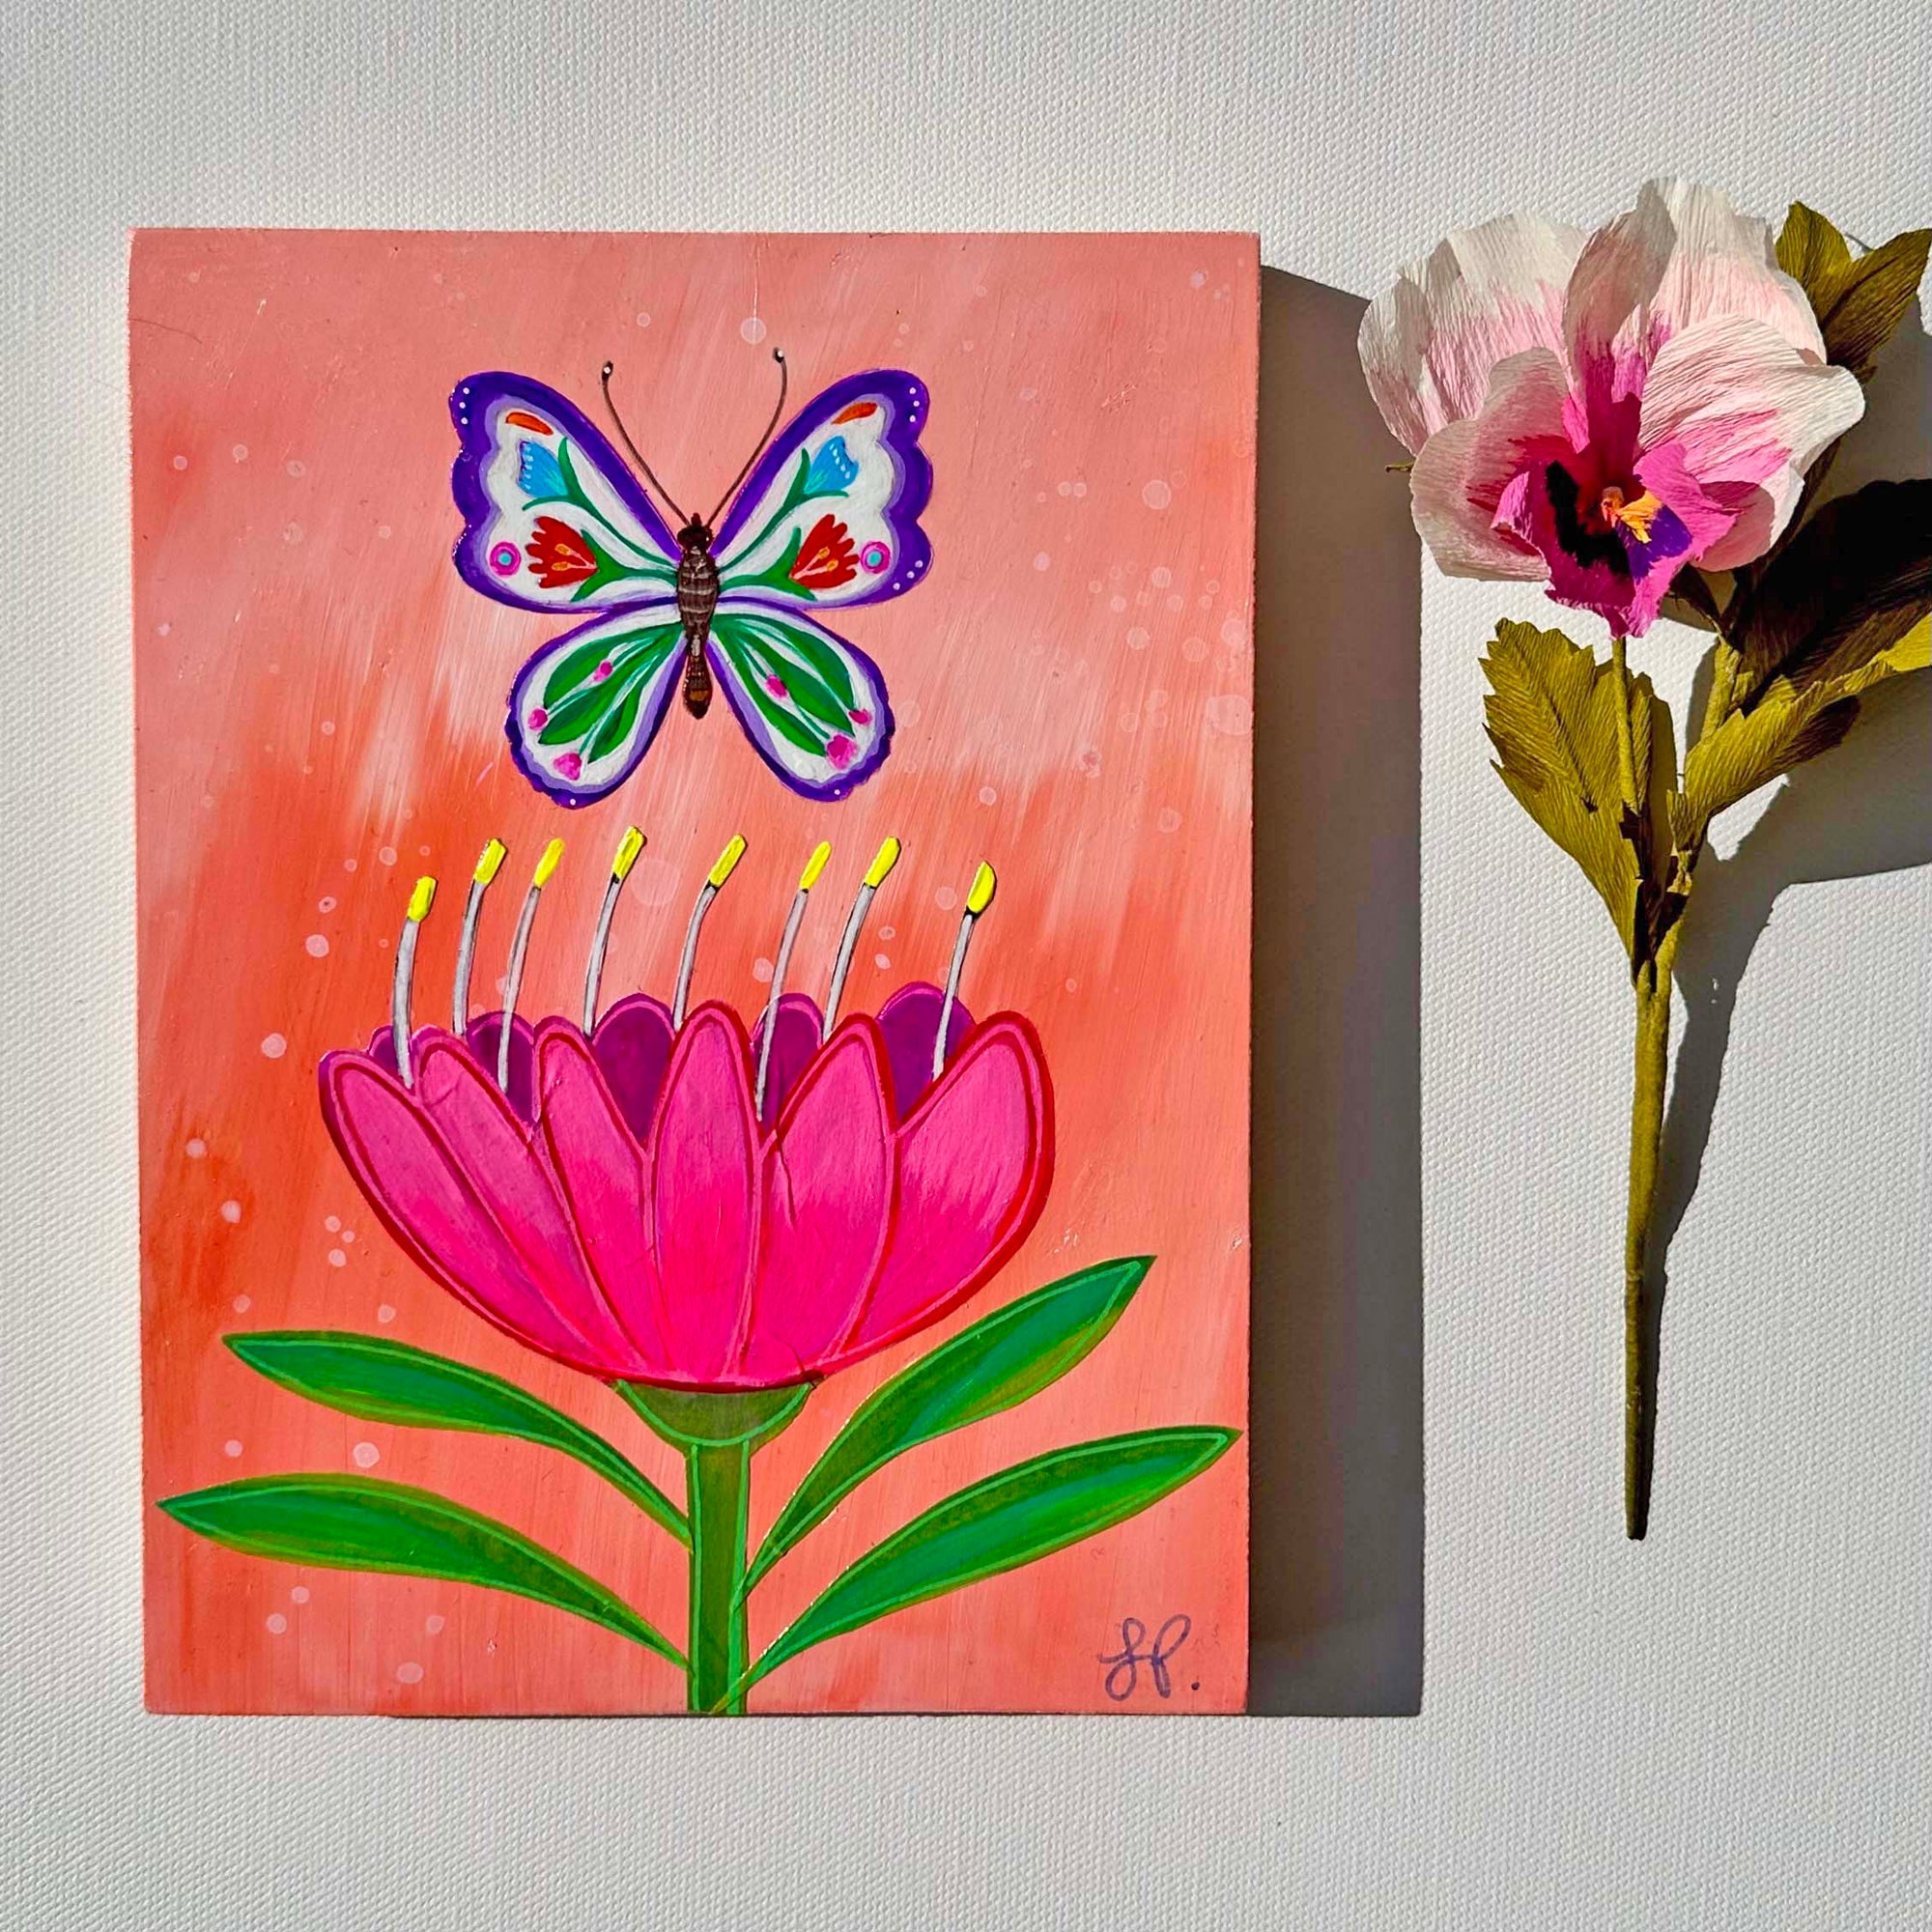 Butterfly Garden Peach Sky (6x8) Original Mixed Media Painting